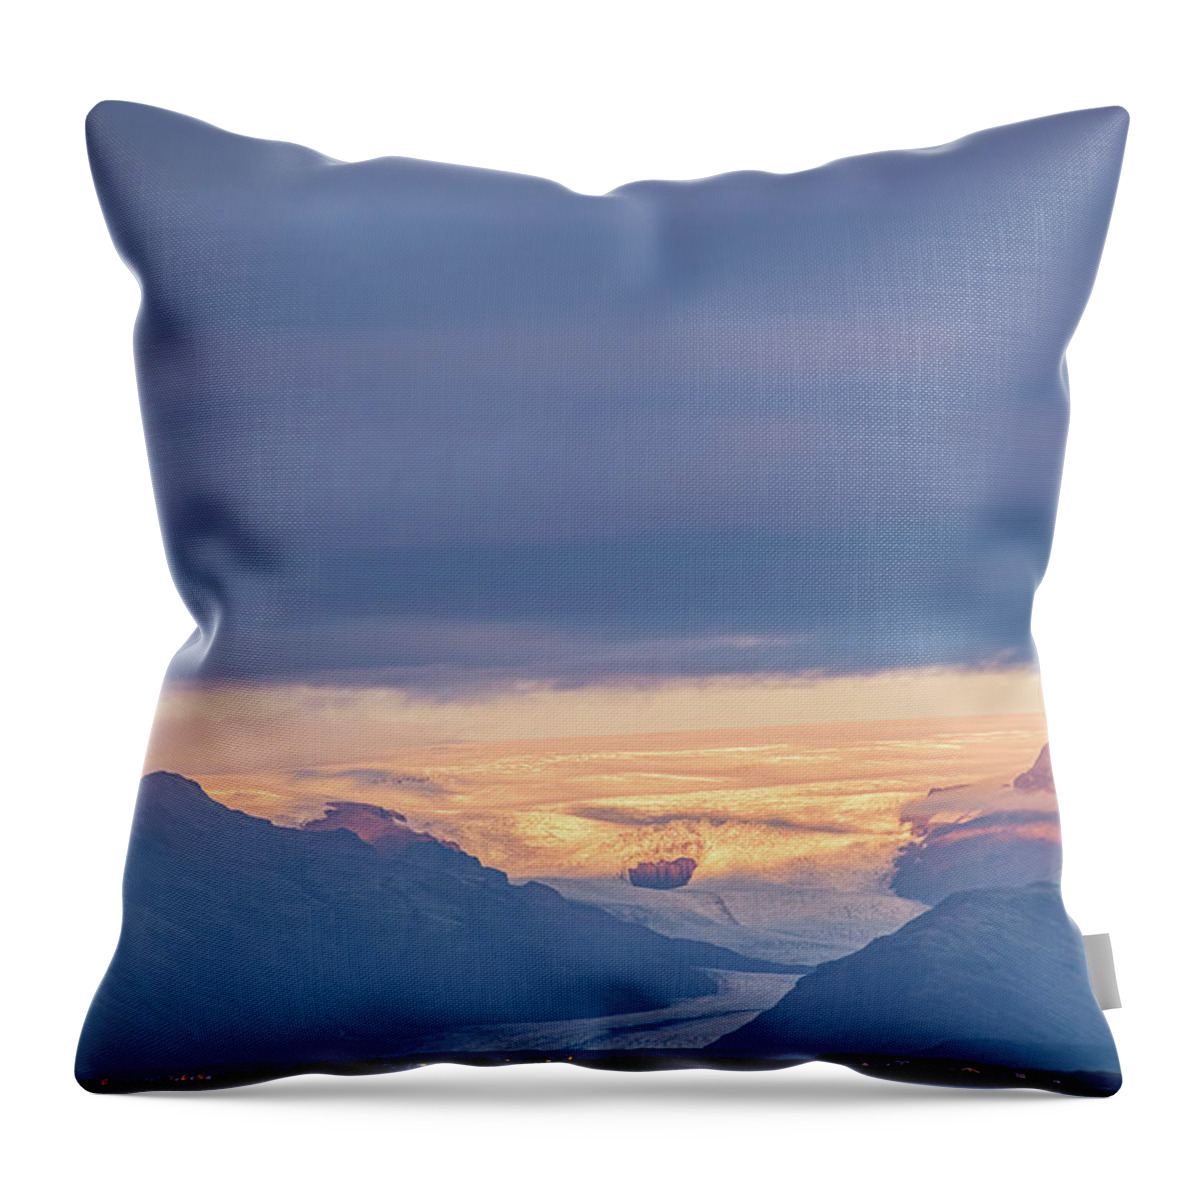 Skaftafellsjokull Throw Pillow featuring the photograph Skaftafellsjokull Glacier Tongue in Iceland at Sunset II by Alexios Ntounas